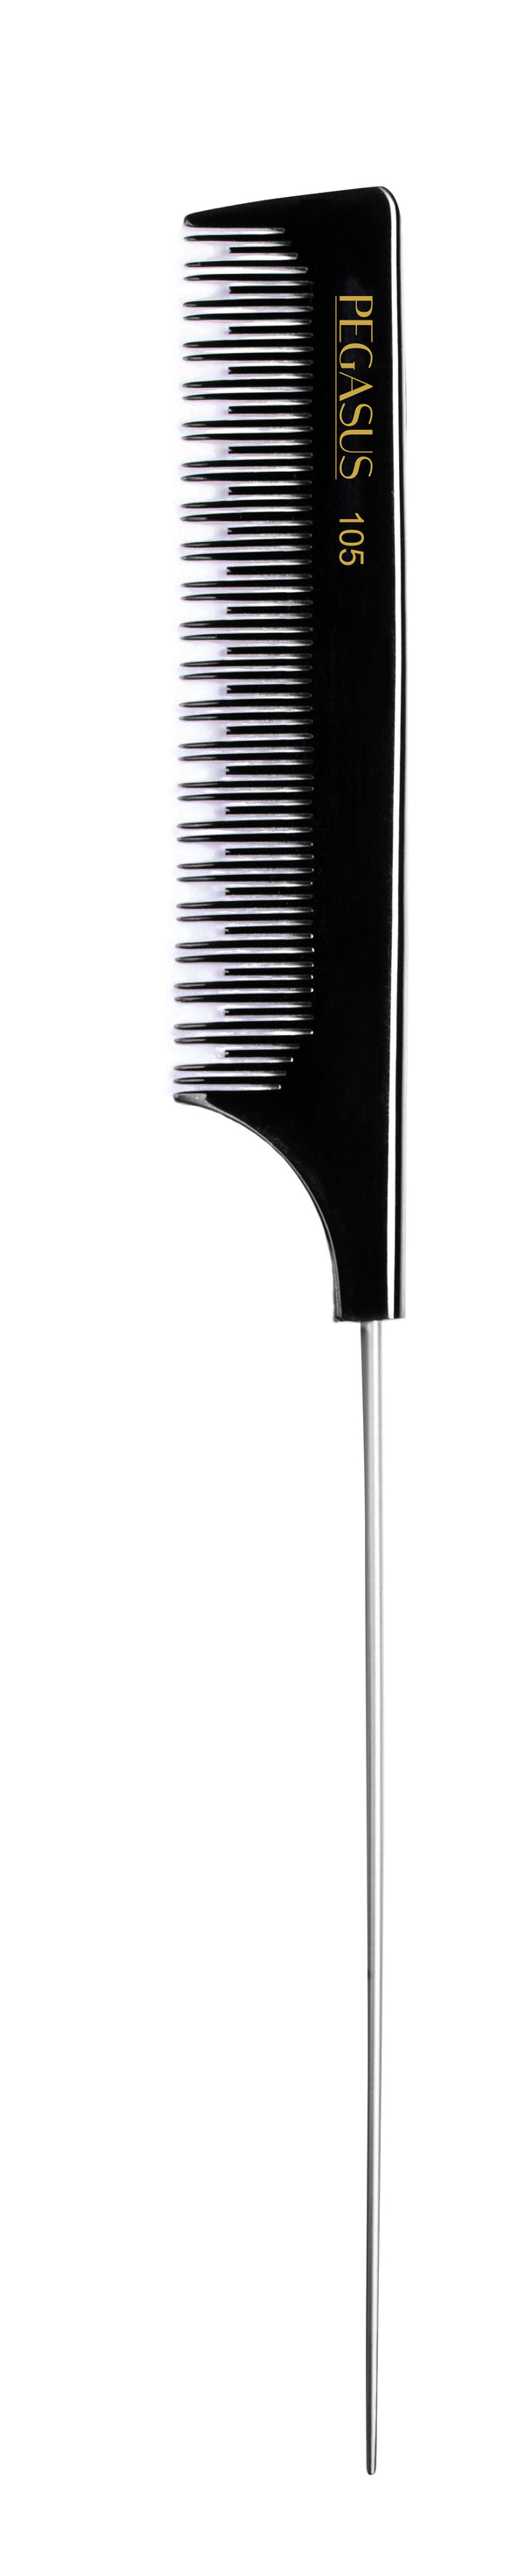 Pegasus Hard Rubber Comb (105) 9.75" Pin Tail Comb